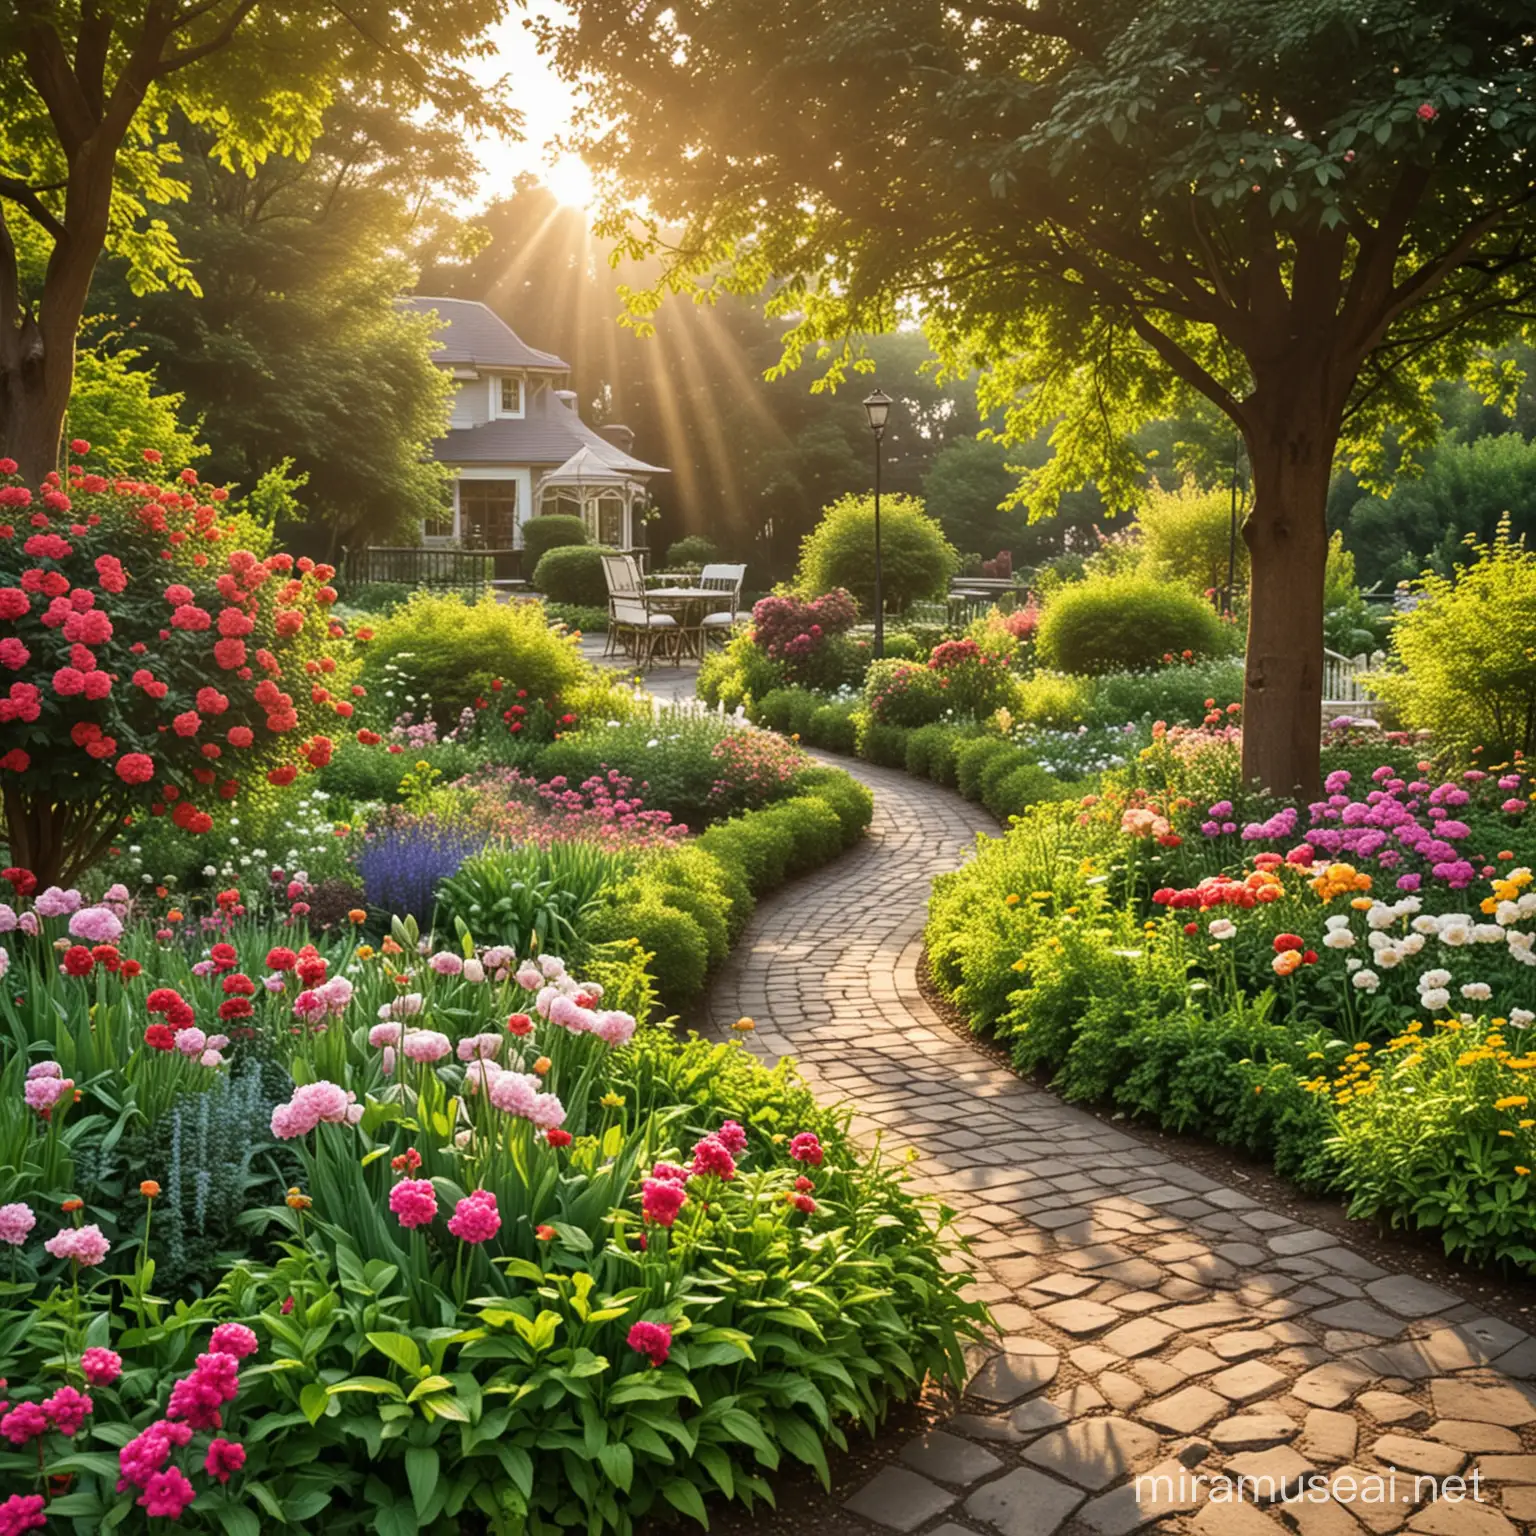 Luxurious Morning in a Serene Garden Oasis